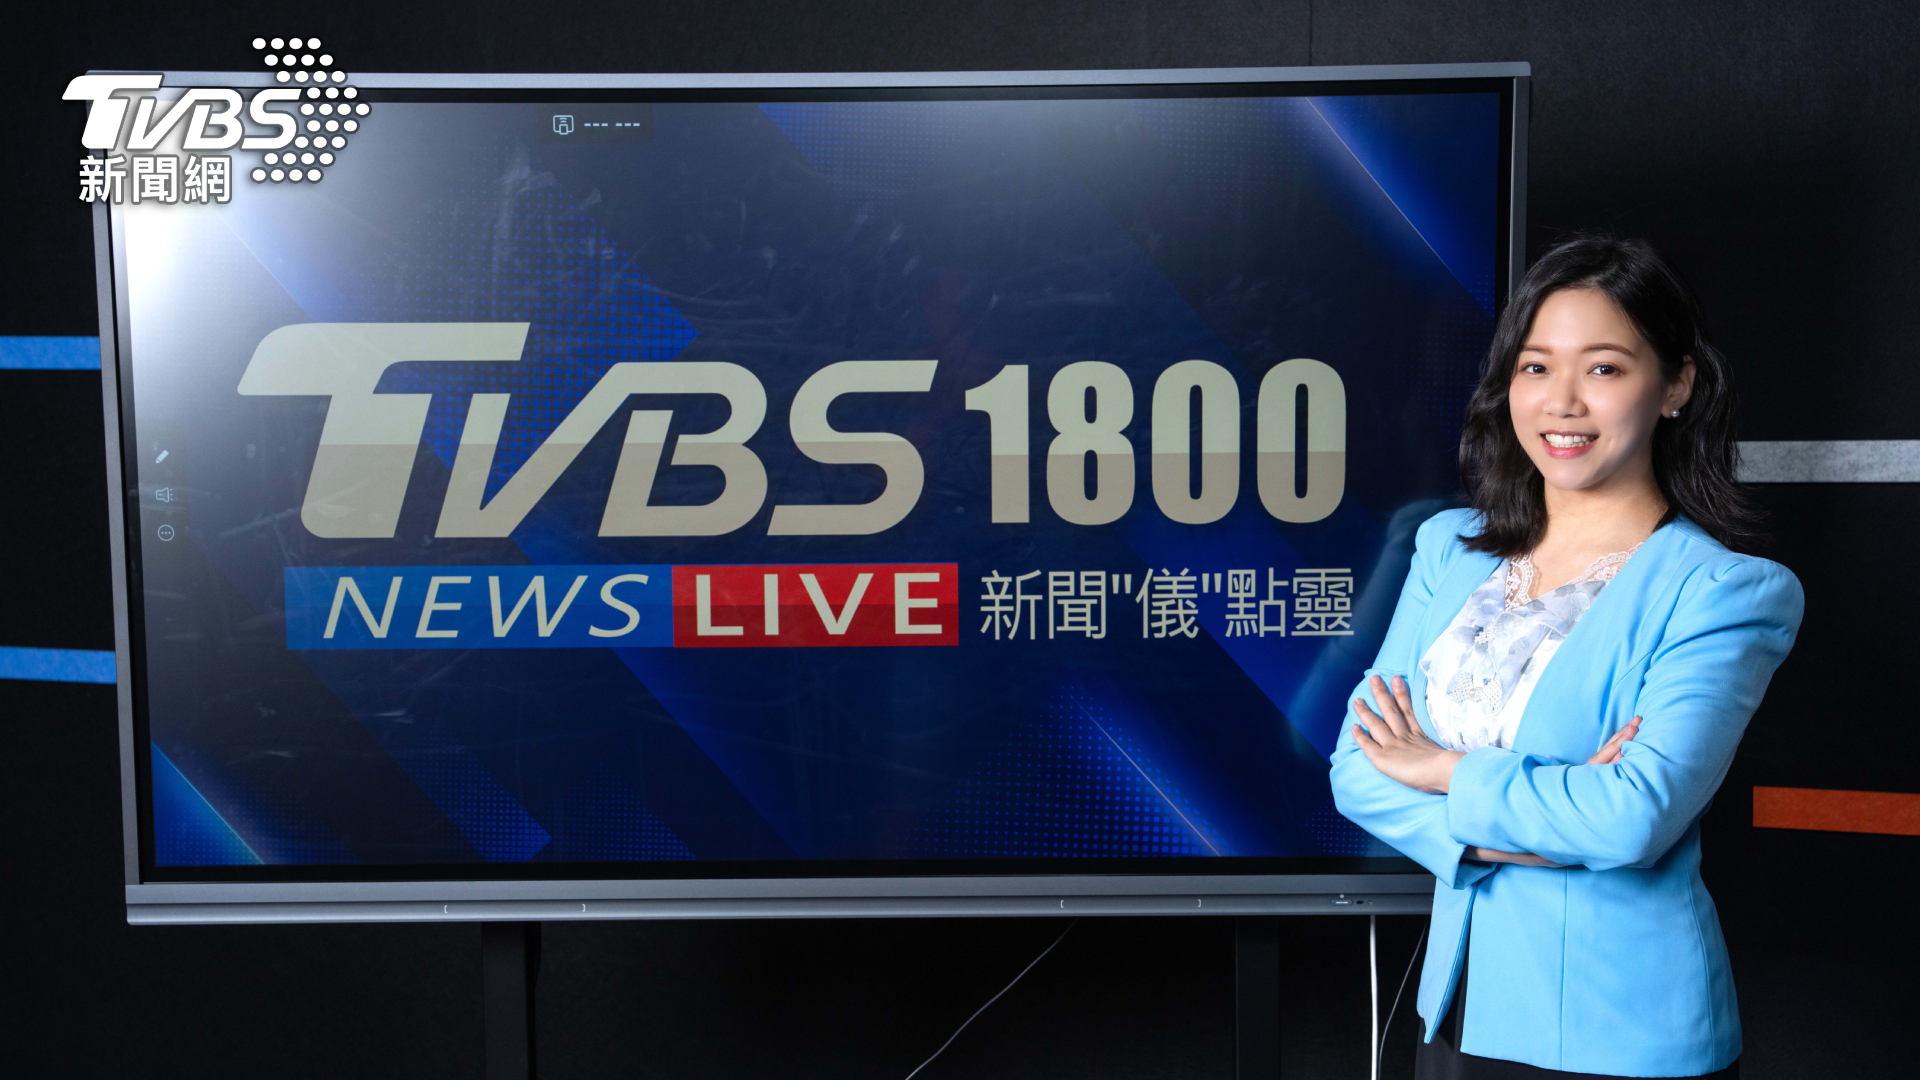 TVBS新聞網晚間6點直播單元「TVBS1800 儀點零」將由王馨儀擔任主播 (圖/TVBS) 